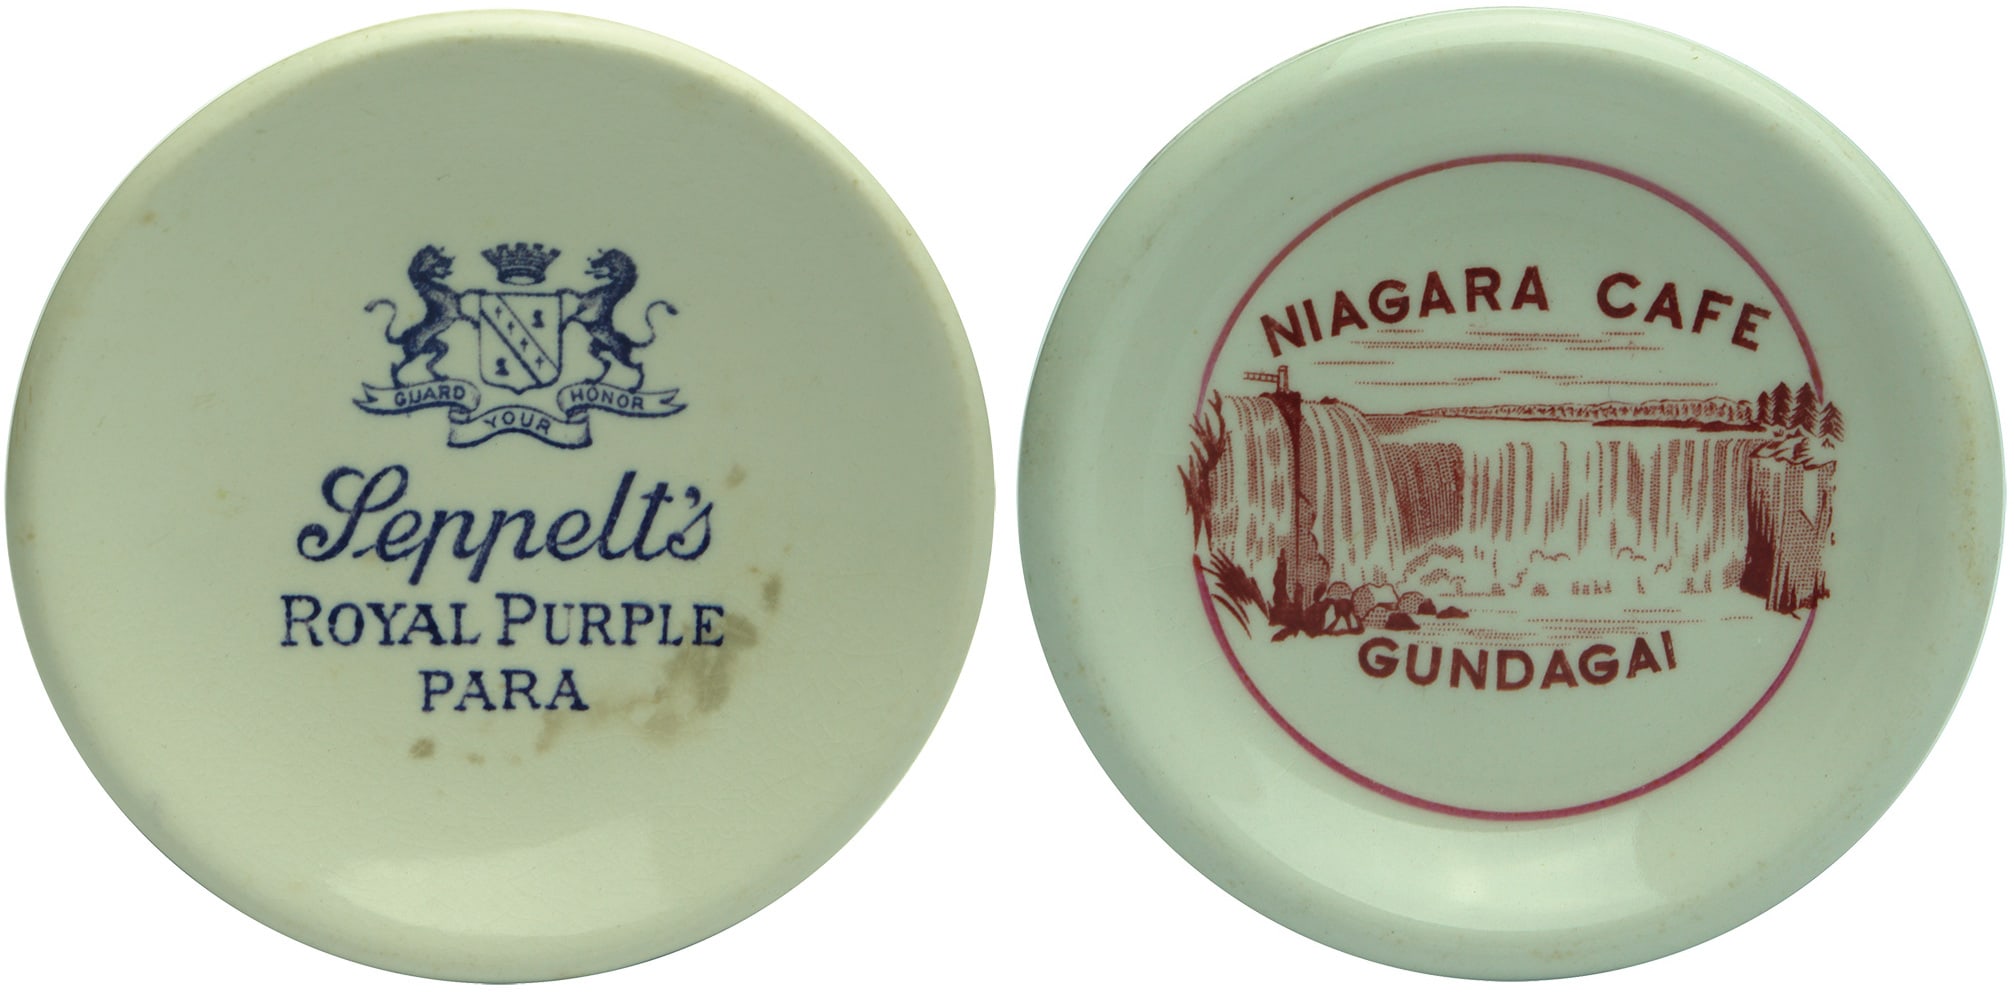 Niagara Cafe Gundagai Seppelts Port Advertising Plates